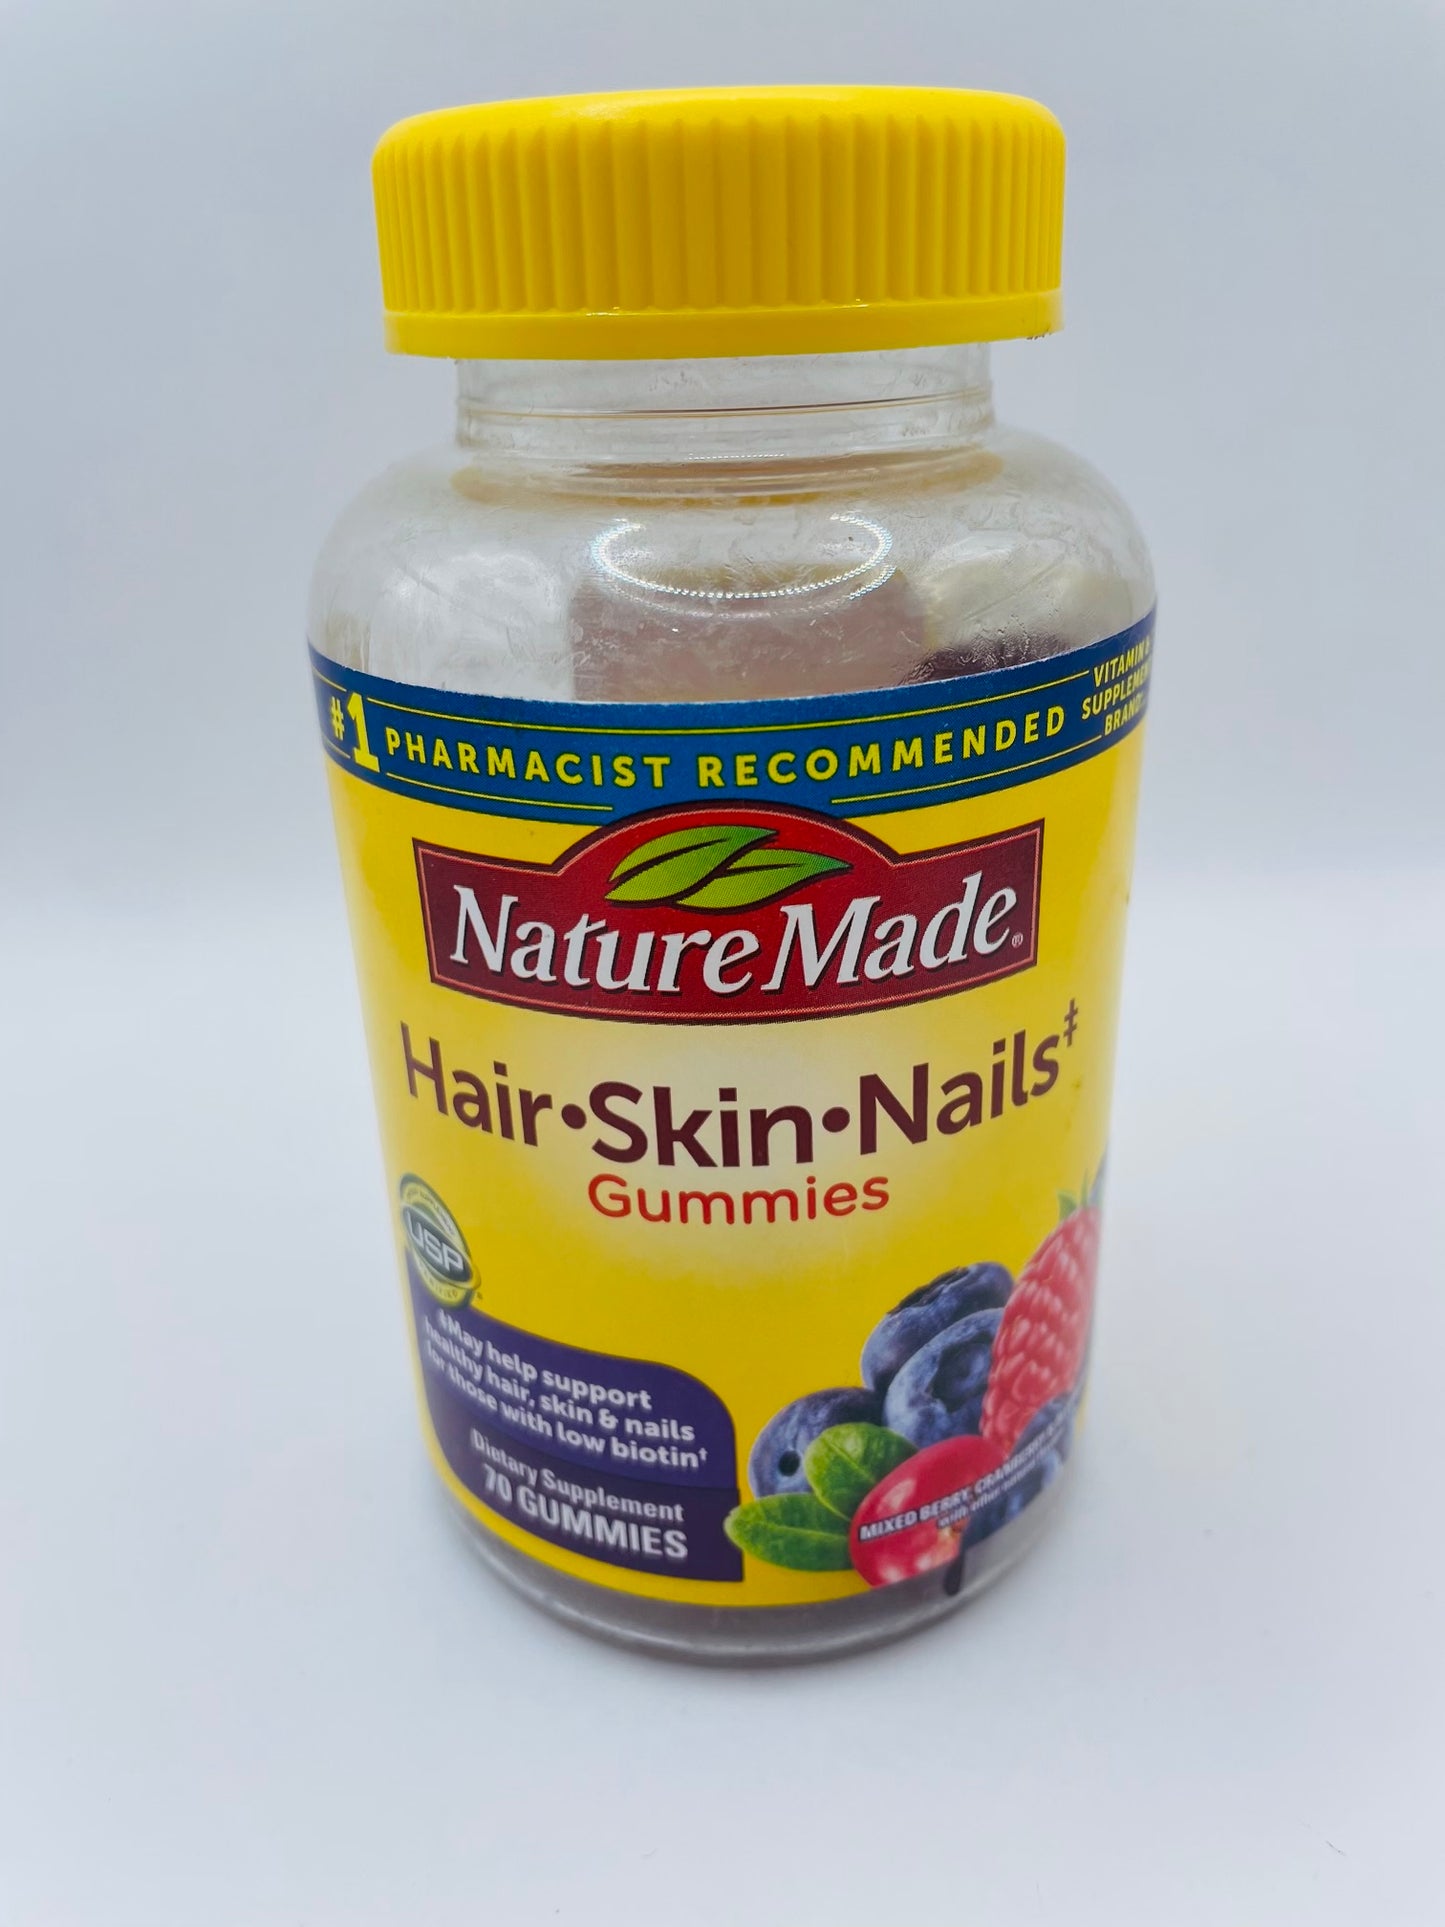 Nature made hair skin nails gummy